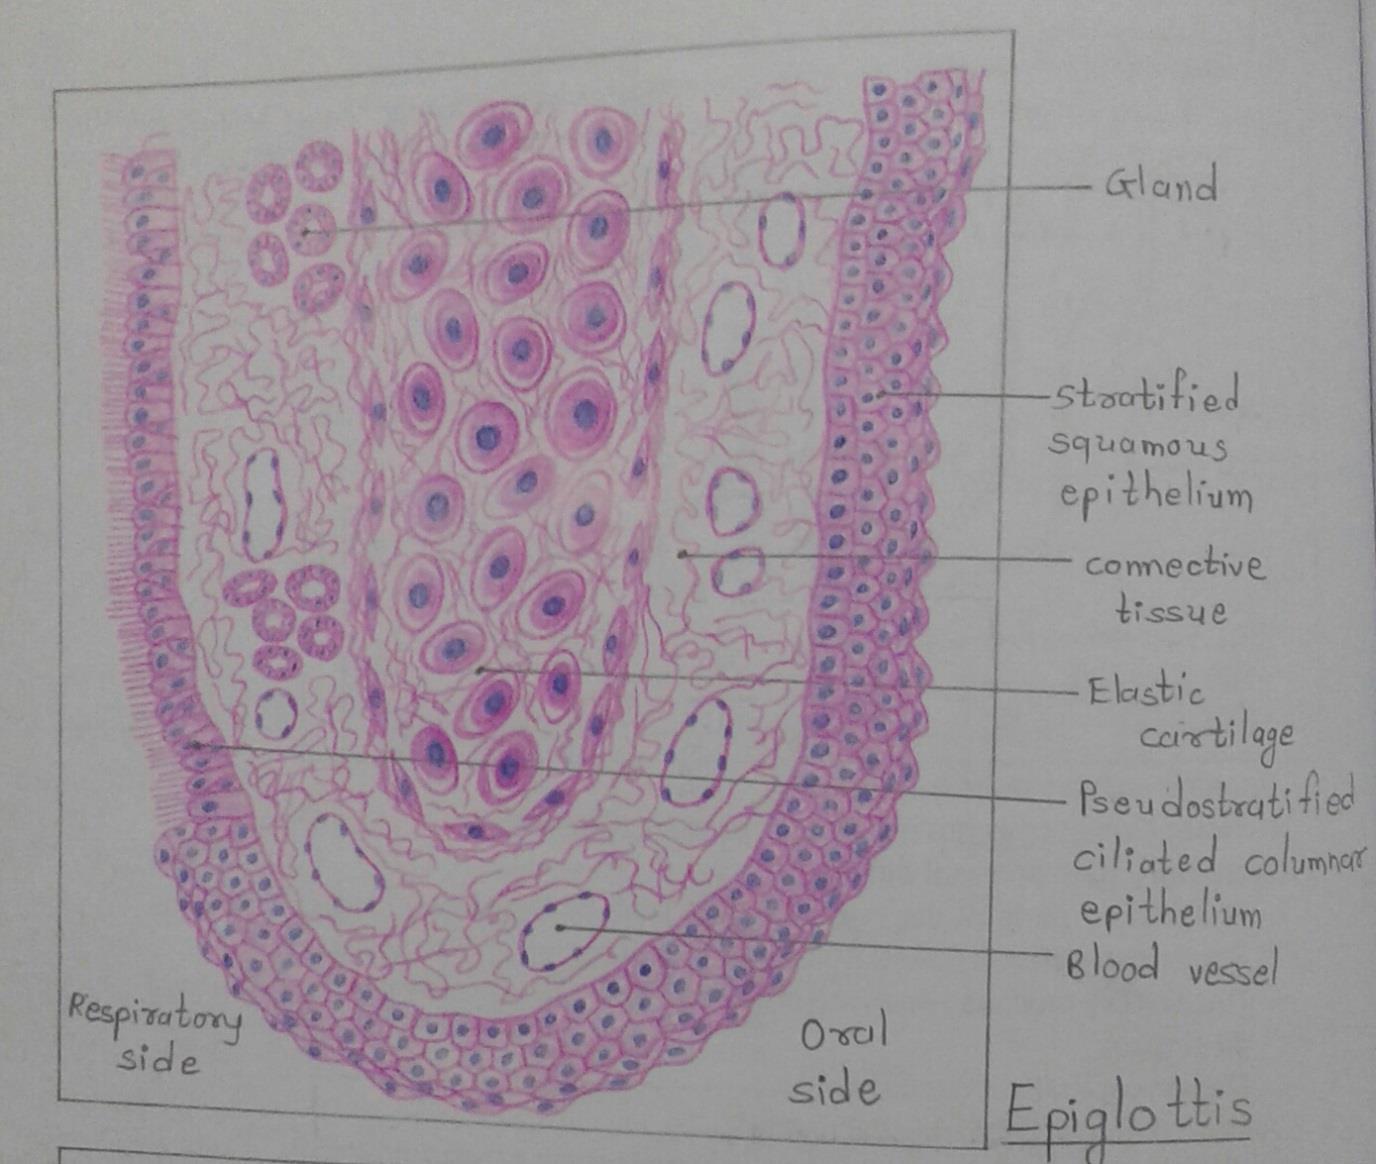 T.S of epiglottis 